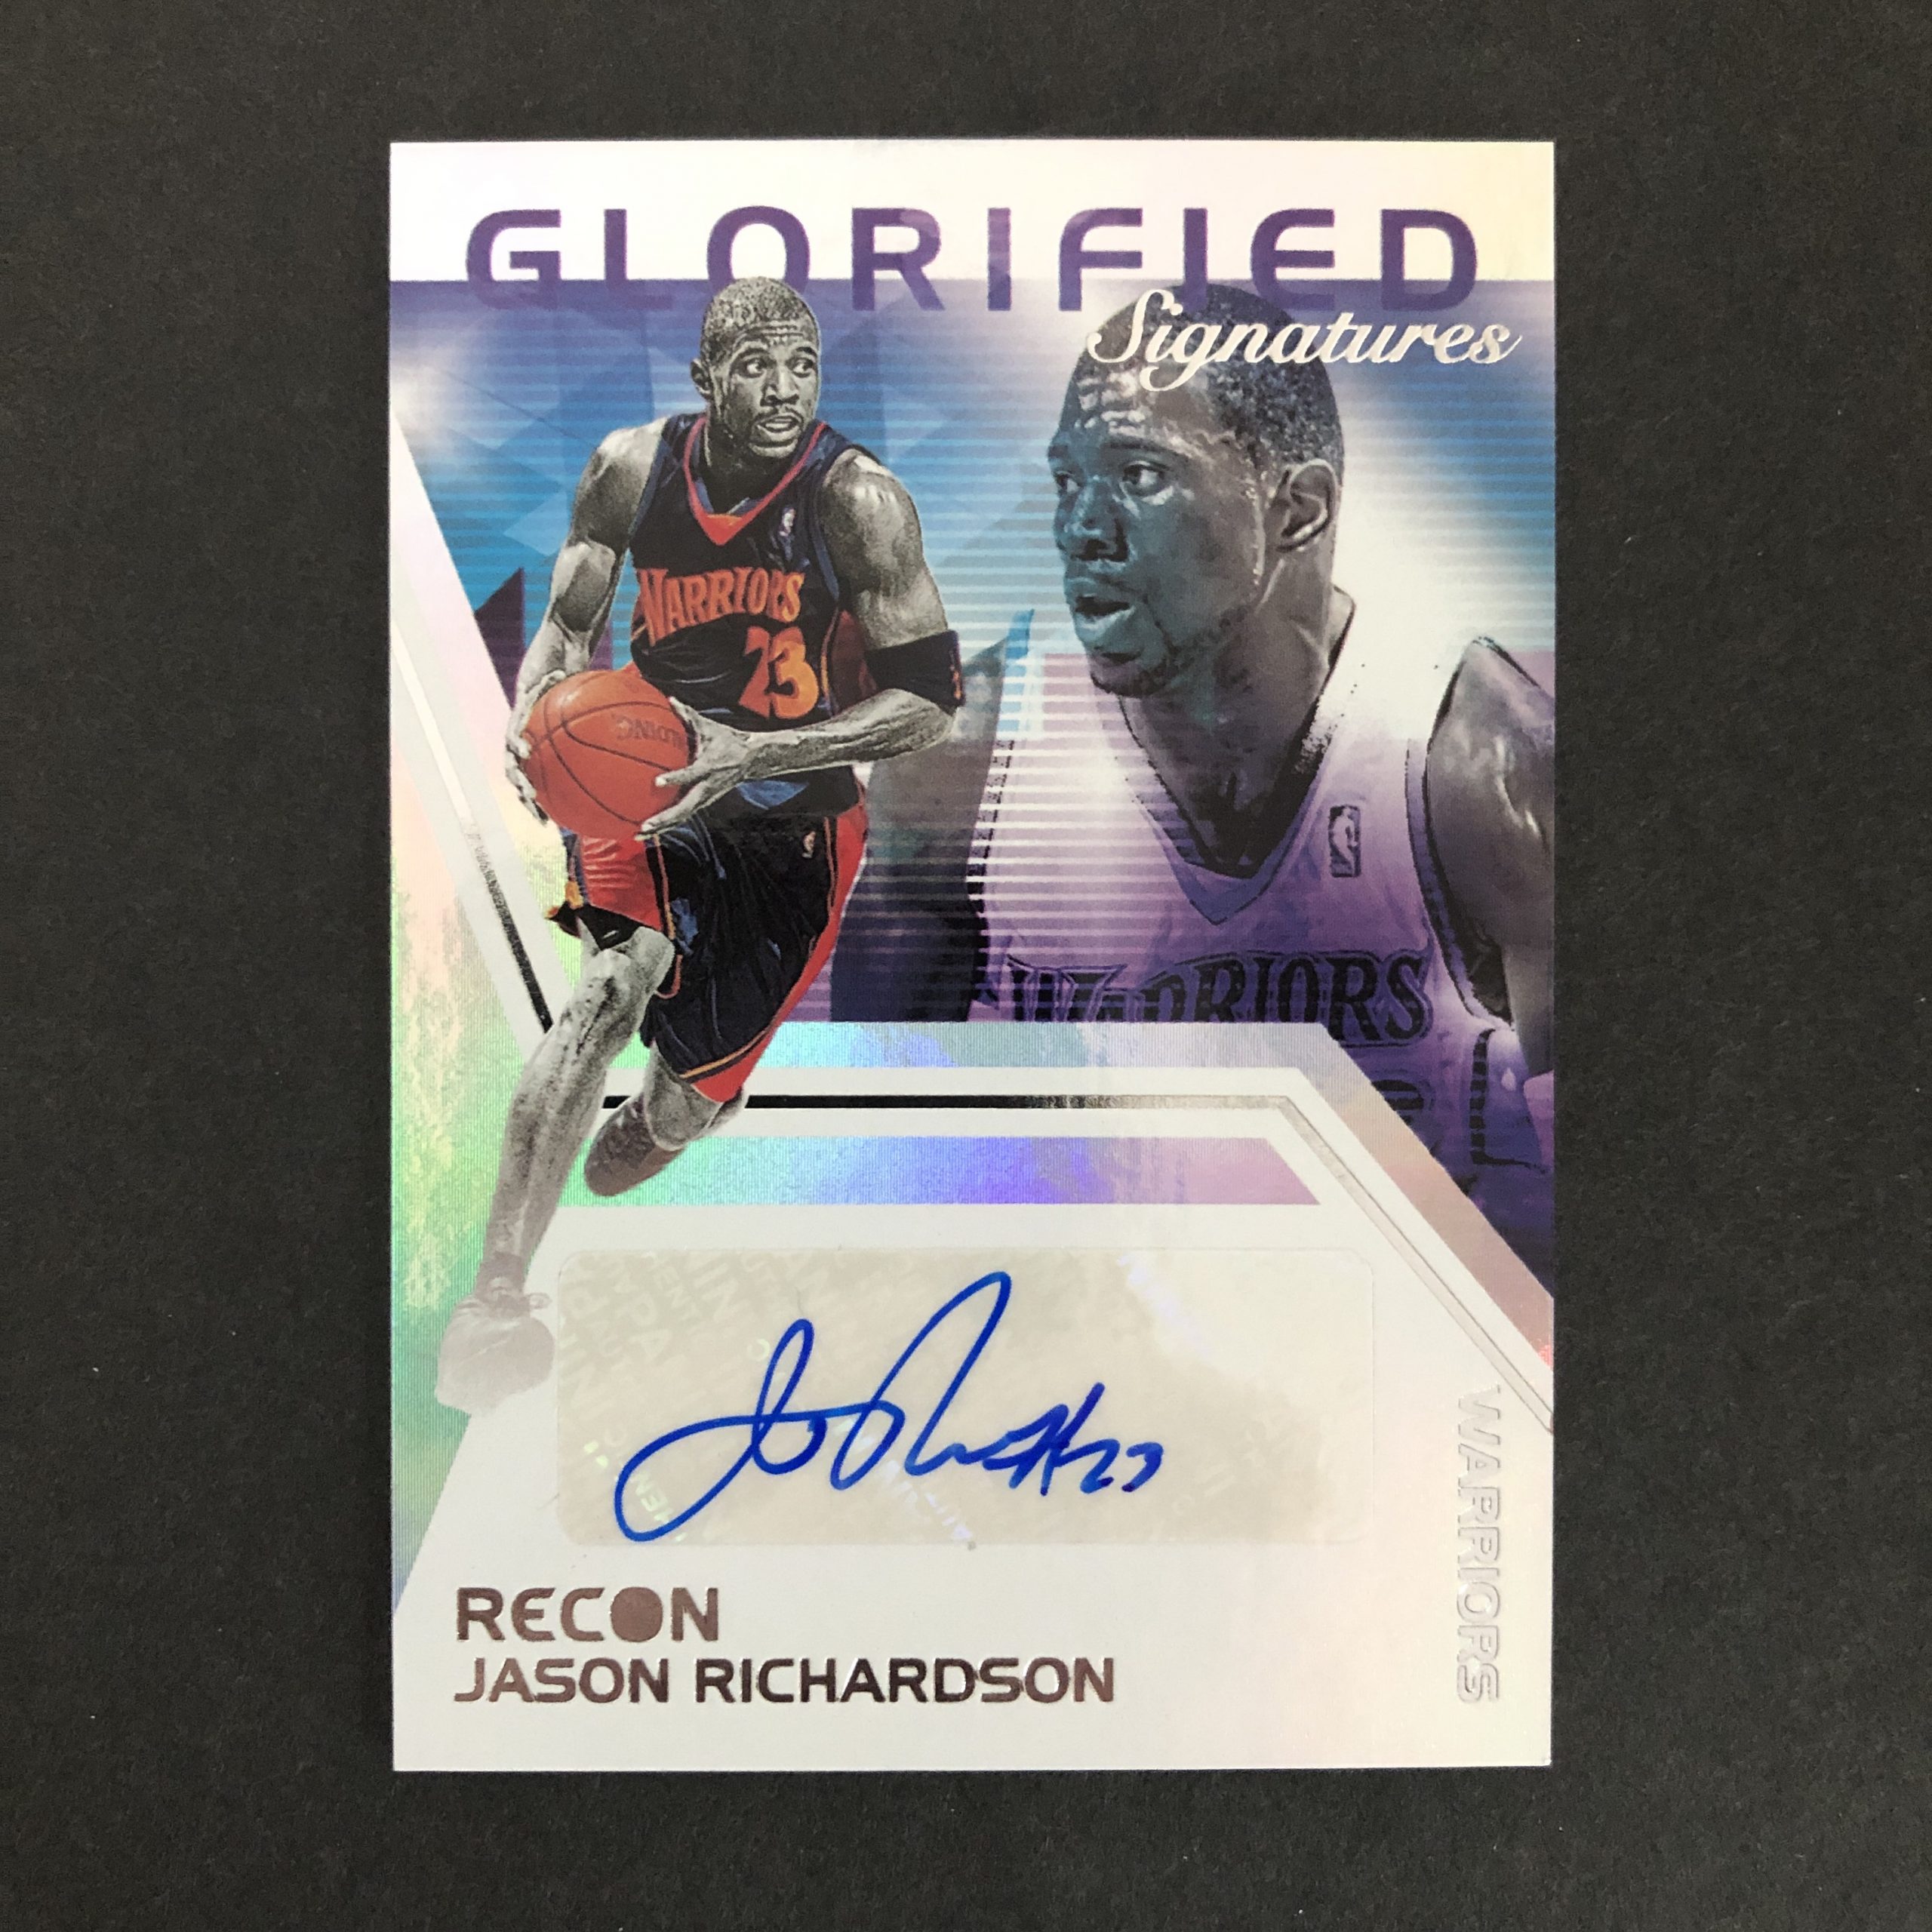 Jason Richardson 2020-21 Recon Glorified Signatures Auto